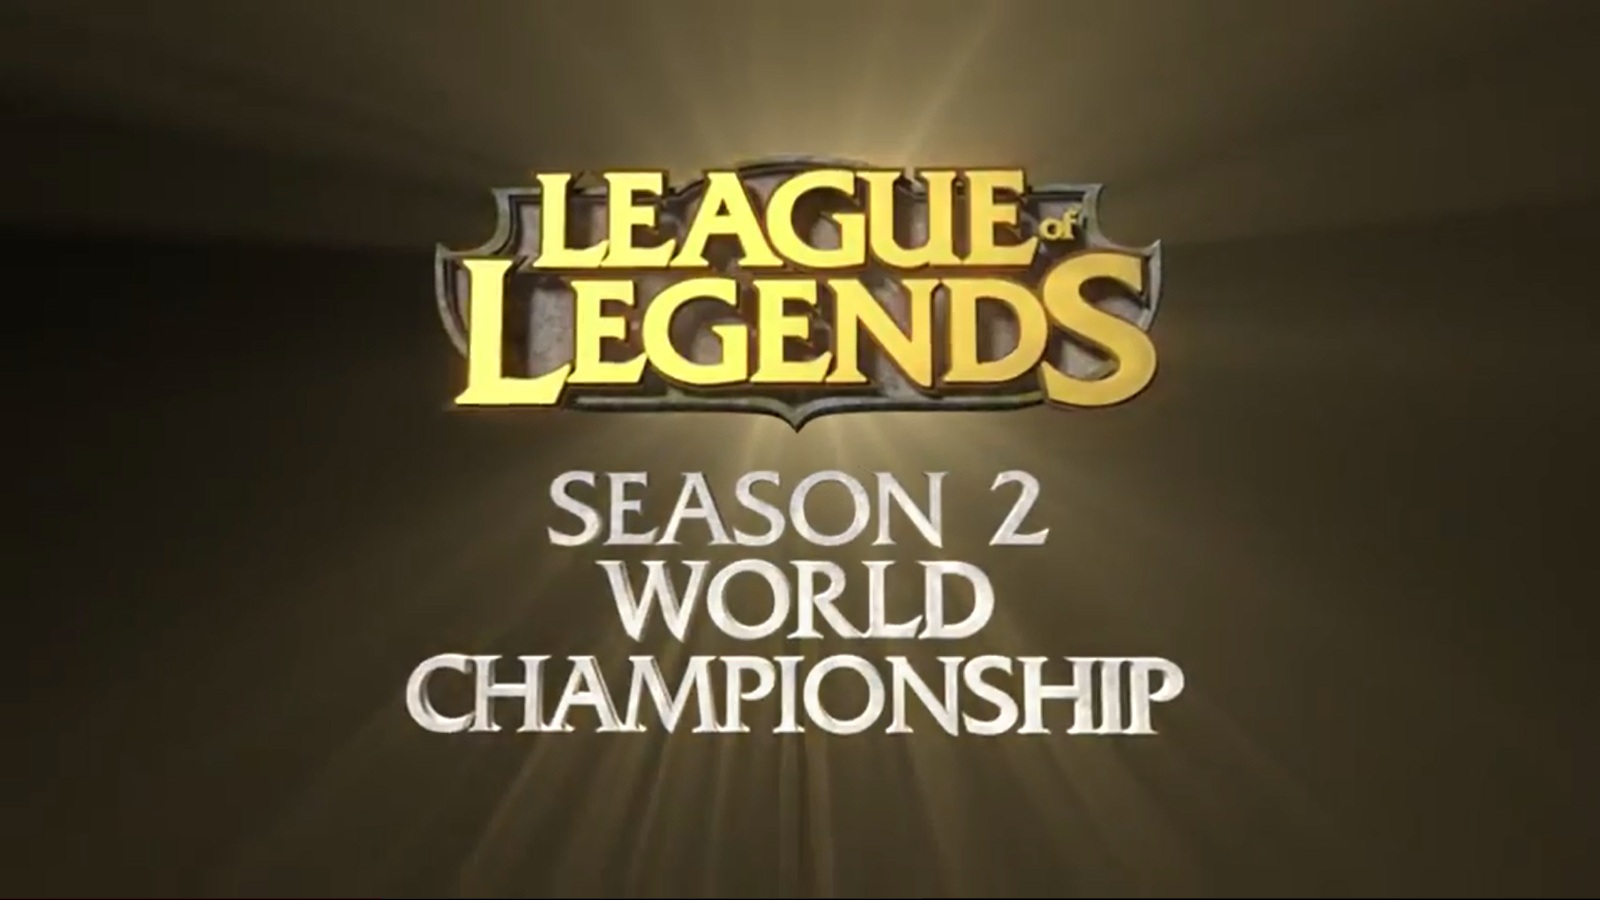 2020 League of Legends World Championship - Wikipedia